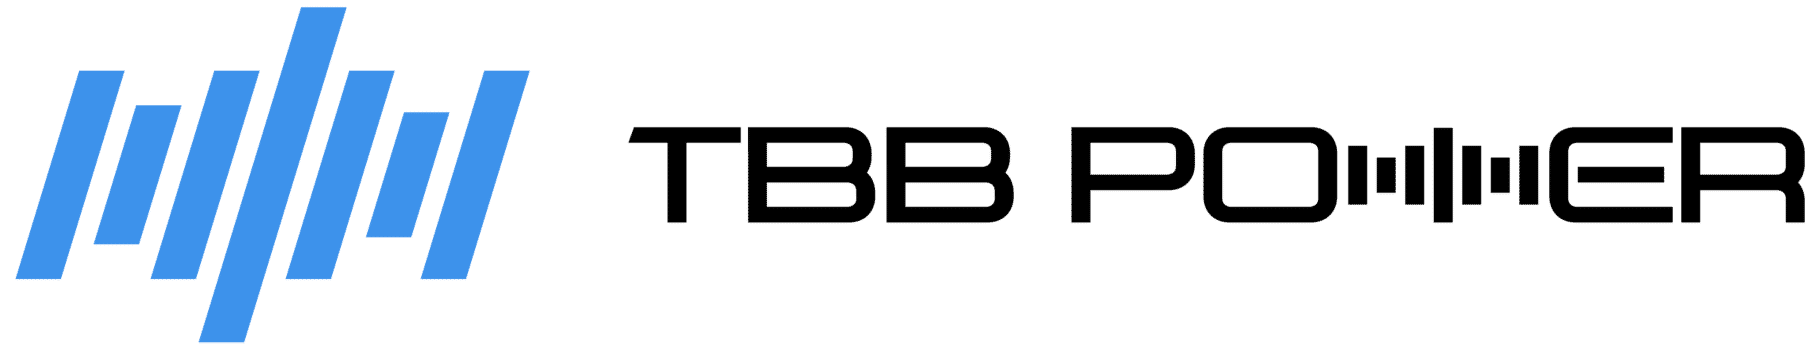 TBB Power Kenya Logo